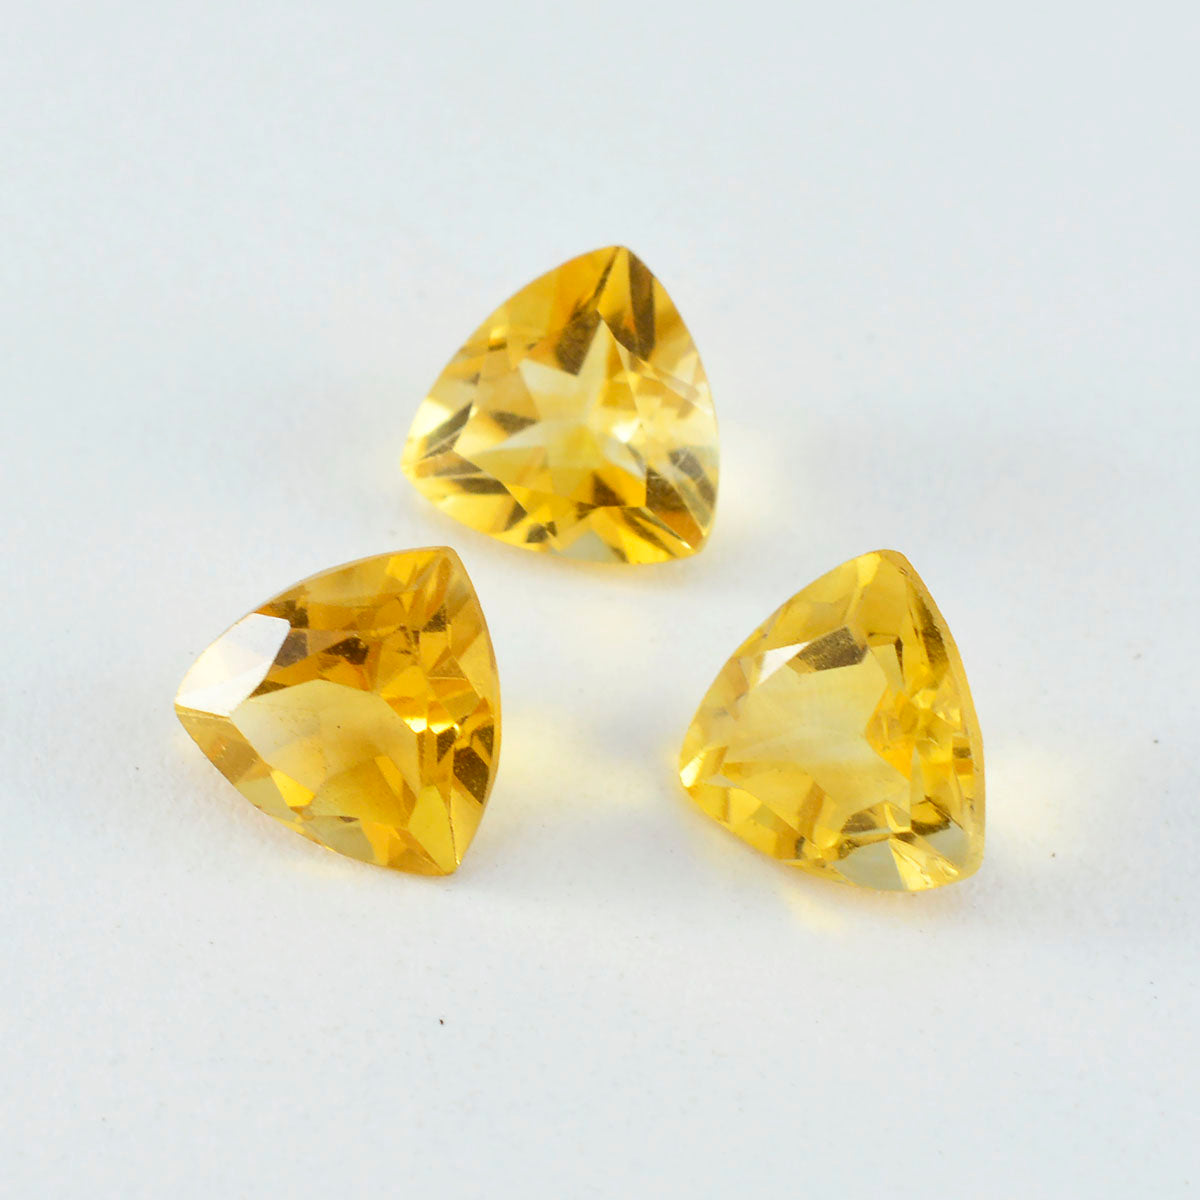 Riyogems 1PC Genuine Yellow Citrine Faceted 9x9 mm Trillion Shape fantastic Quality Loose Stone